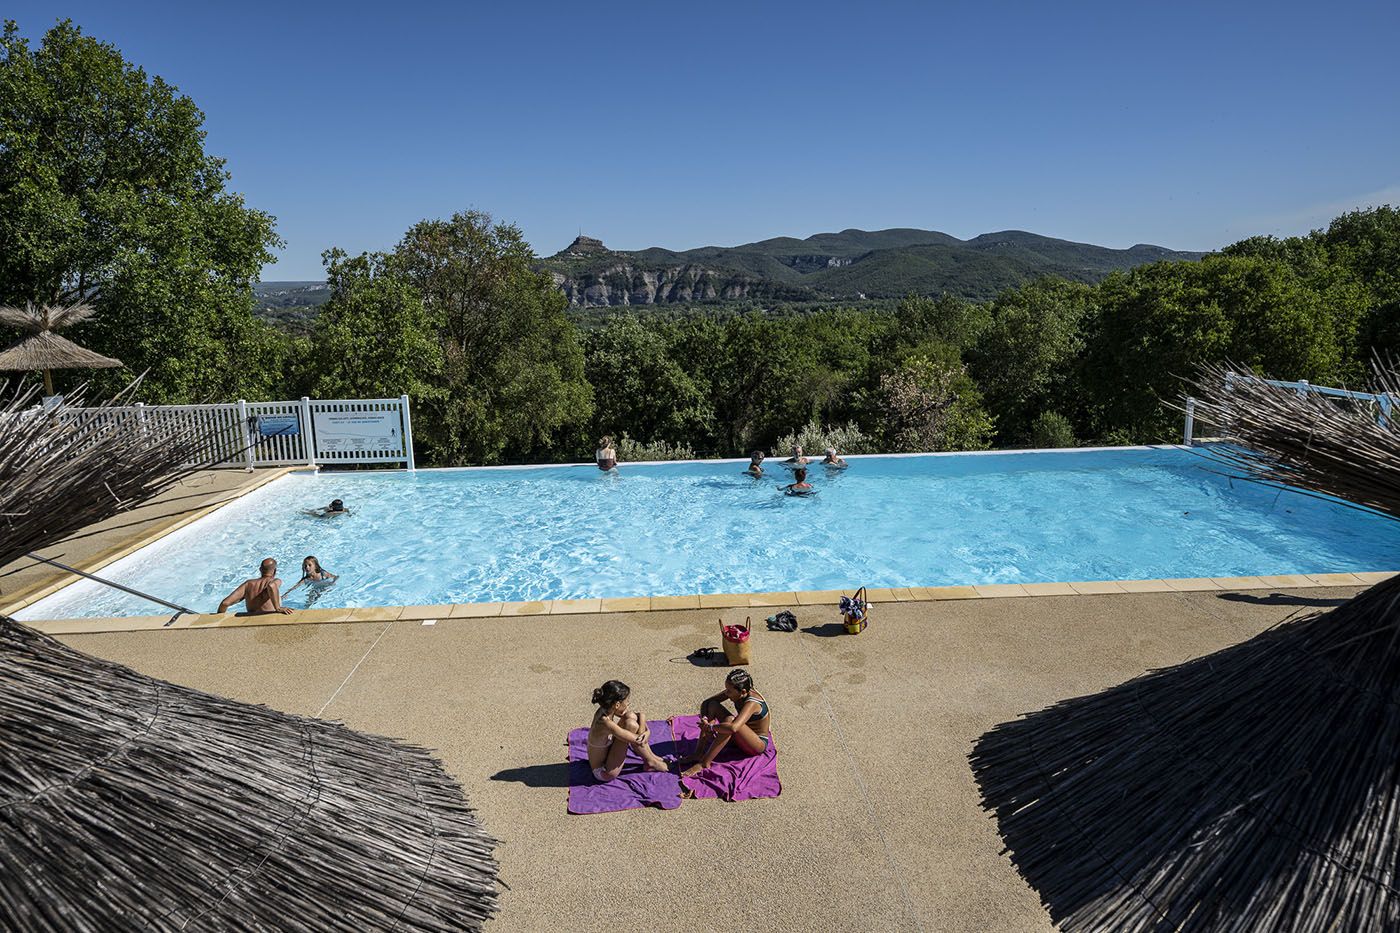 Camping Le Mas de Chavetourte - The swimming pool